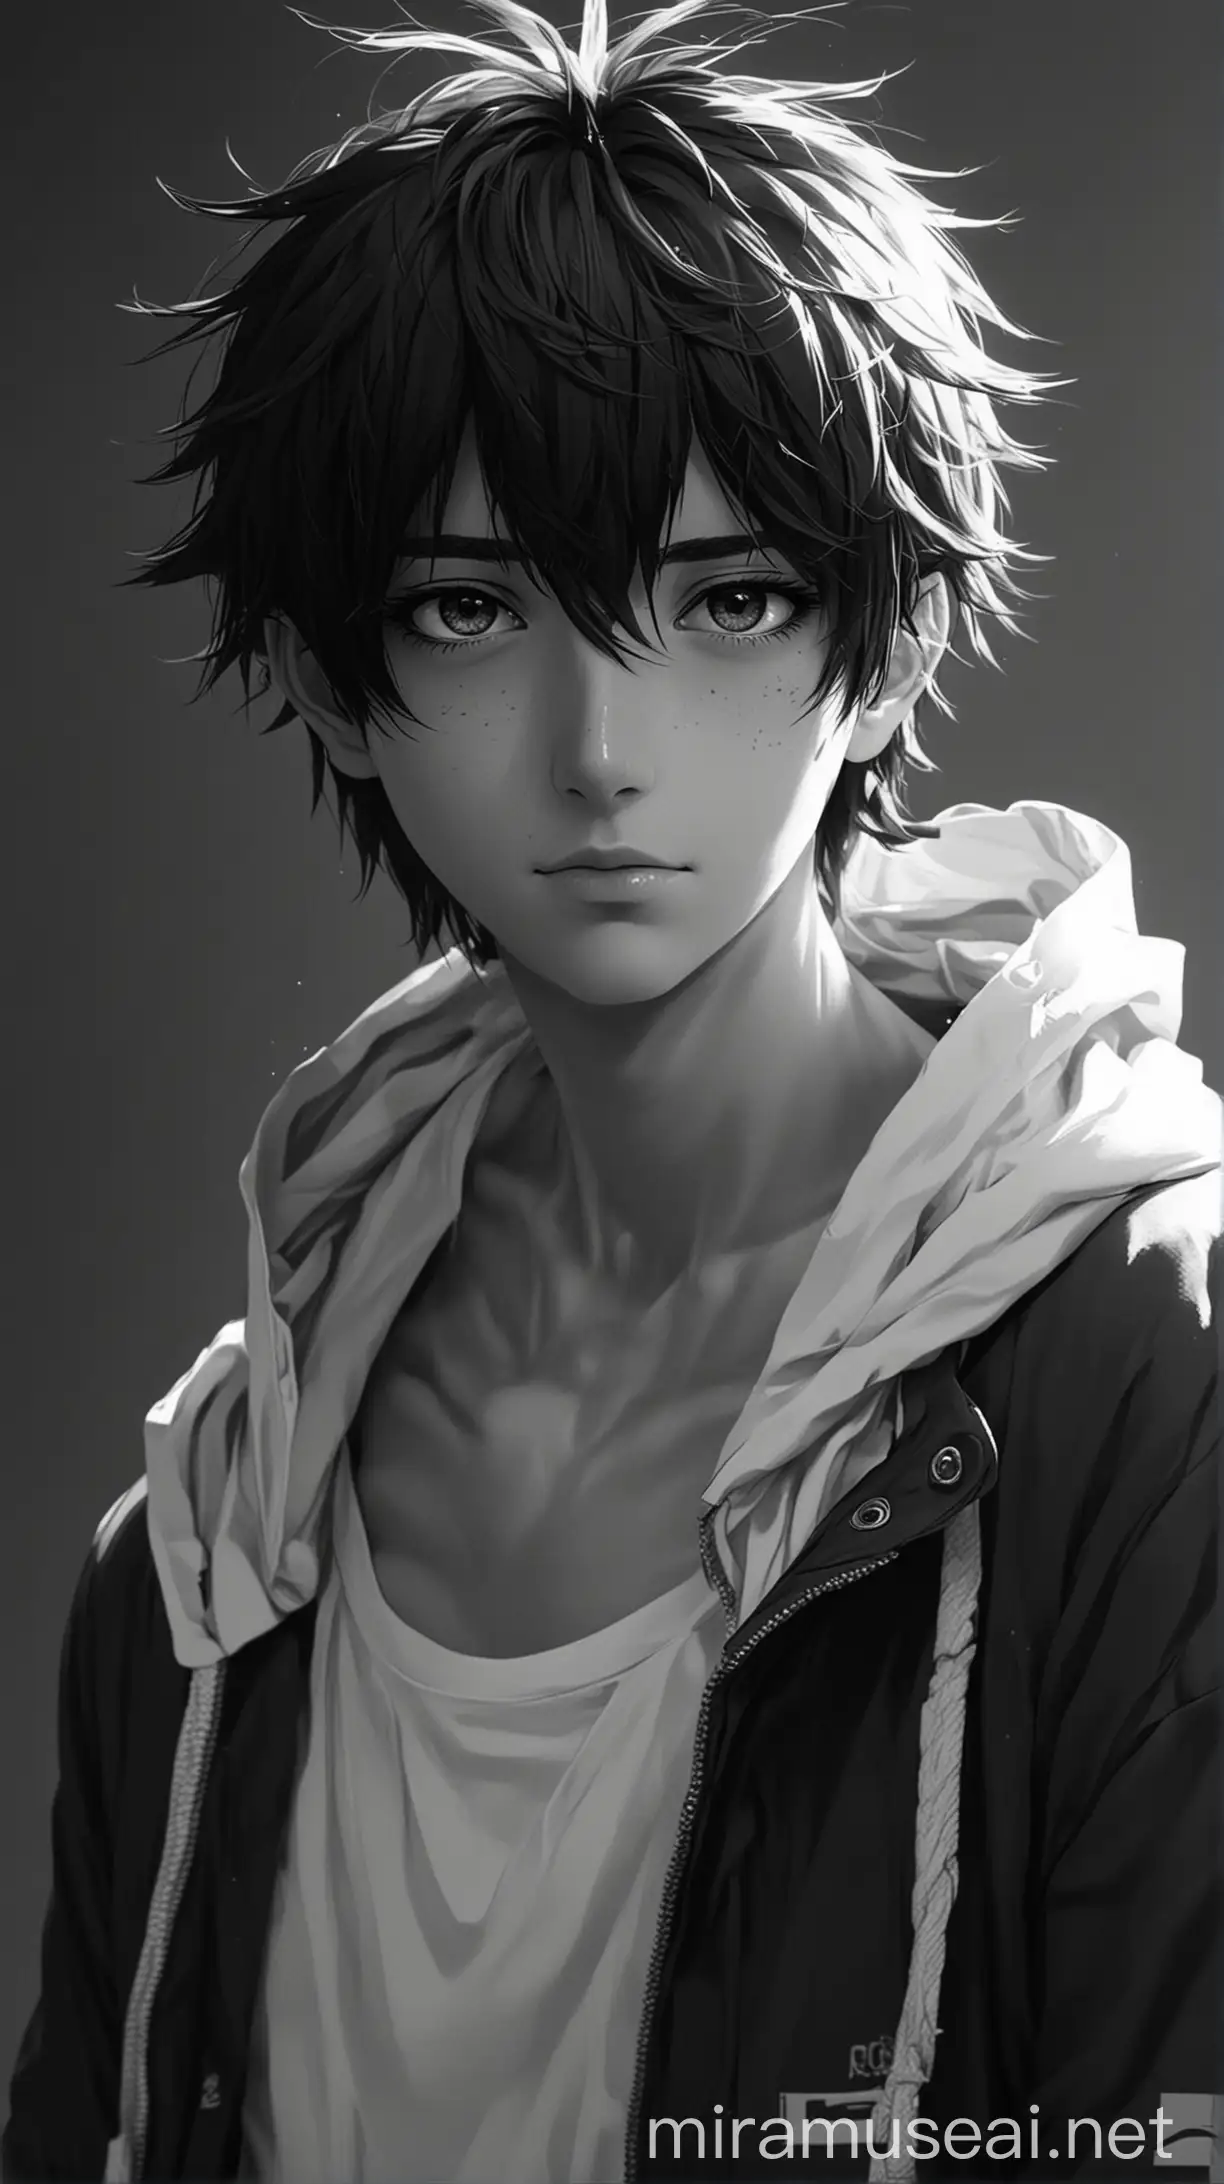 Anime Boy Black White Digital Art Monochrome Portrait of a Stylish Anime Character